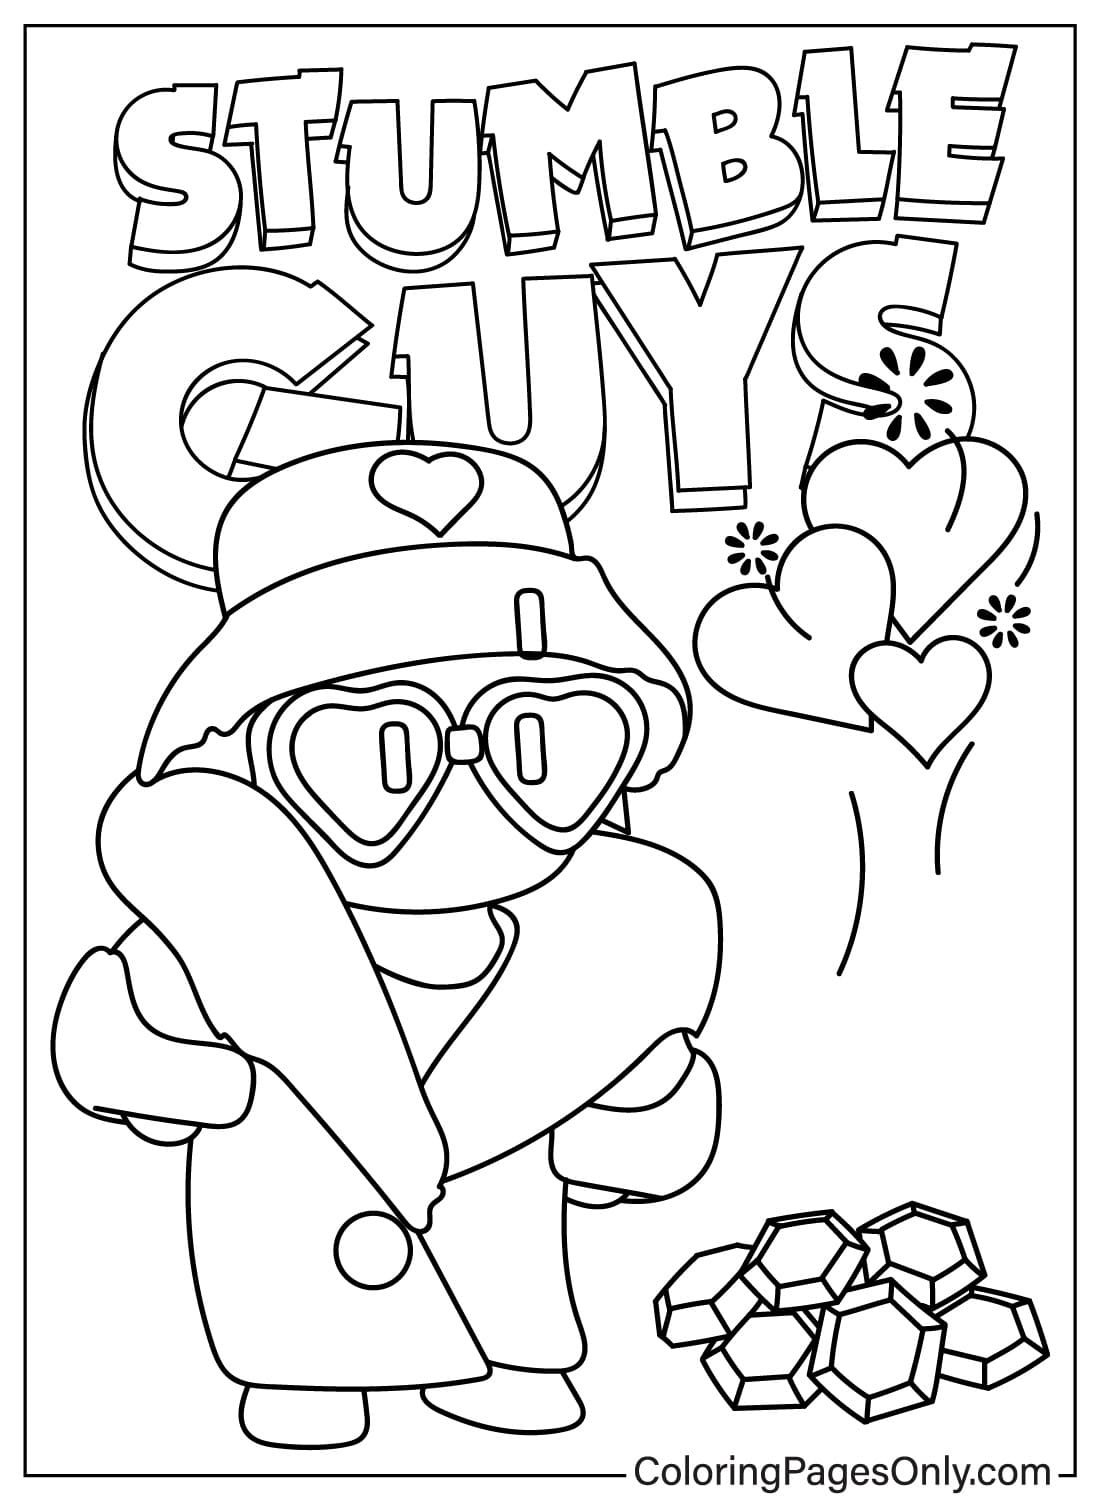 Desenho para colorir de Stumble Guys de Stumble Guys